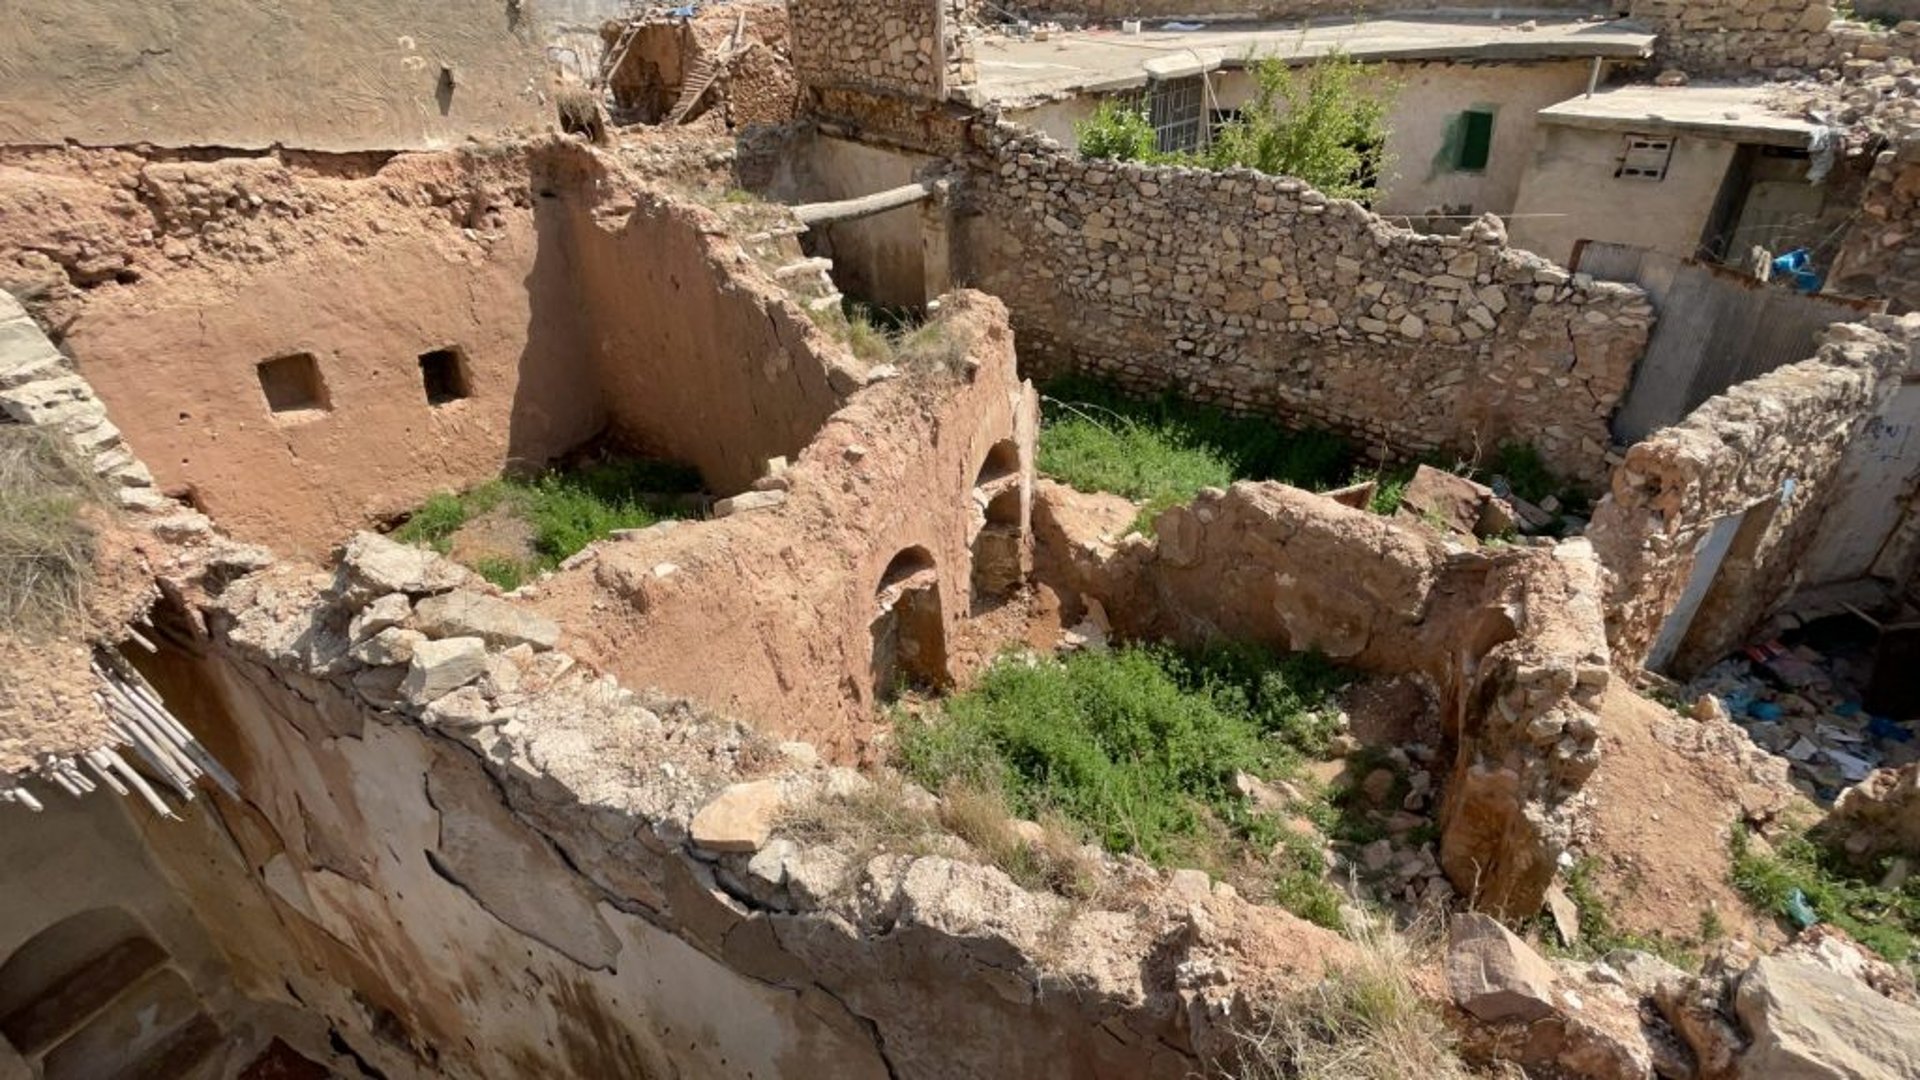 Kurdistans antiquities directorates seek formal recognition support